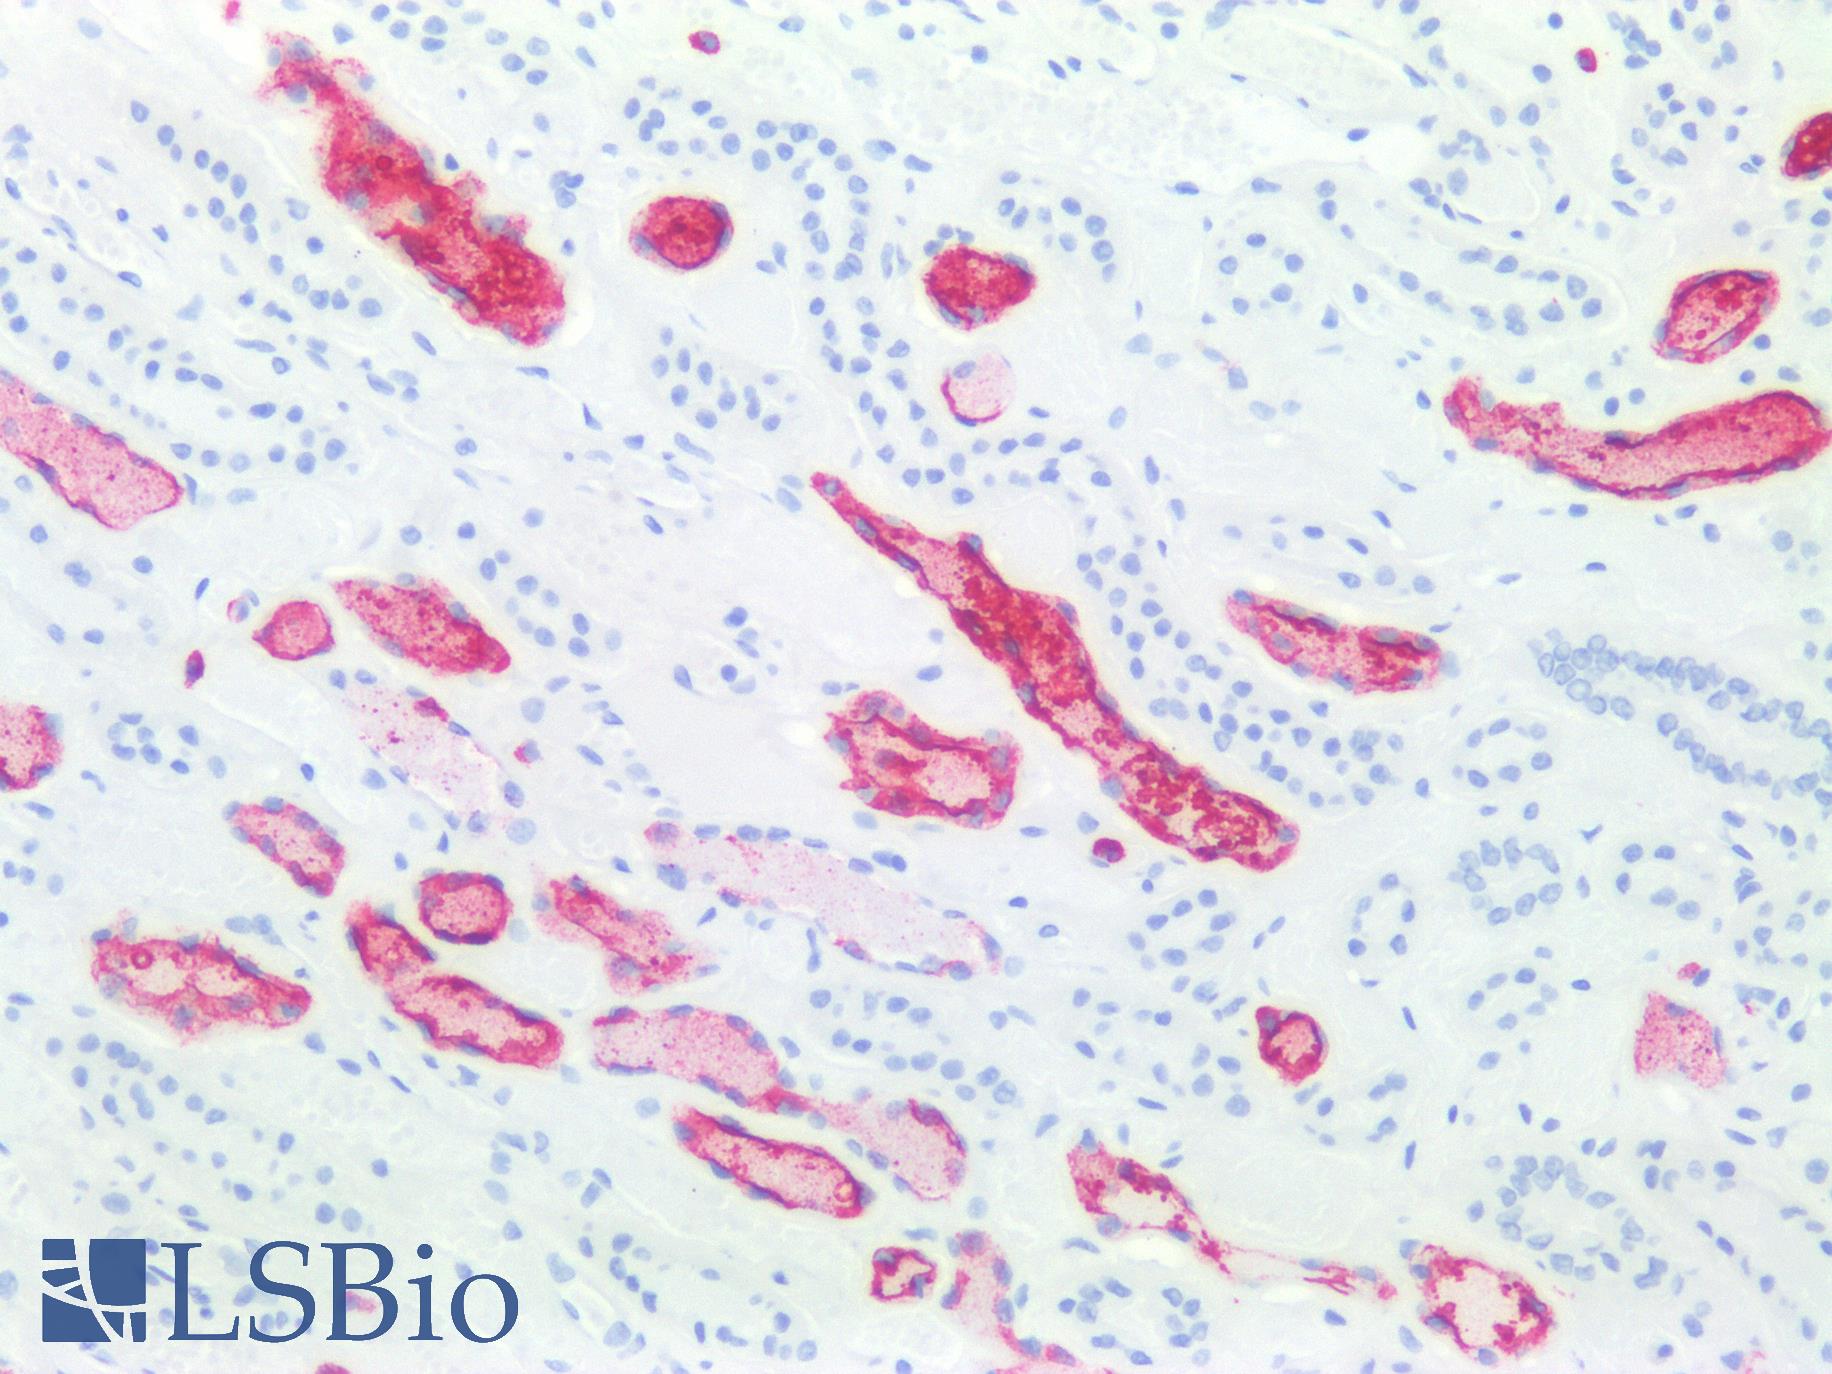 SSEA-1 / Lewis x / CD15 Antibody - Human Kidney: Formalin-Fixed, Paraffin-Embedded (FFPE)